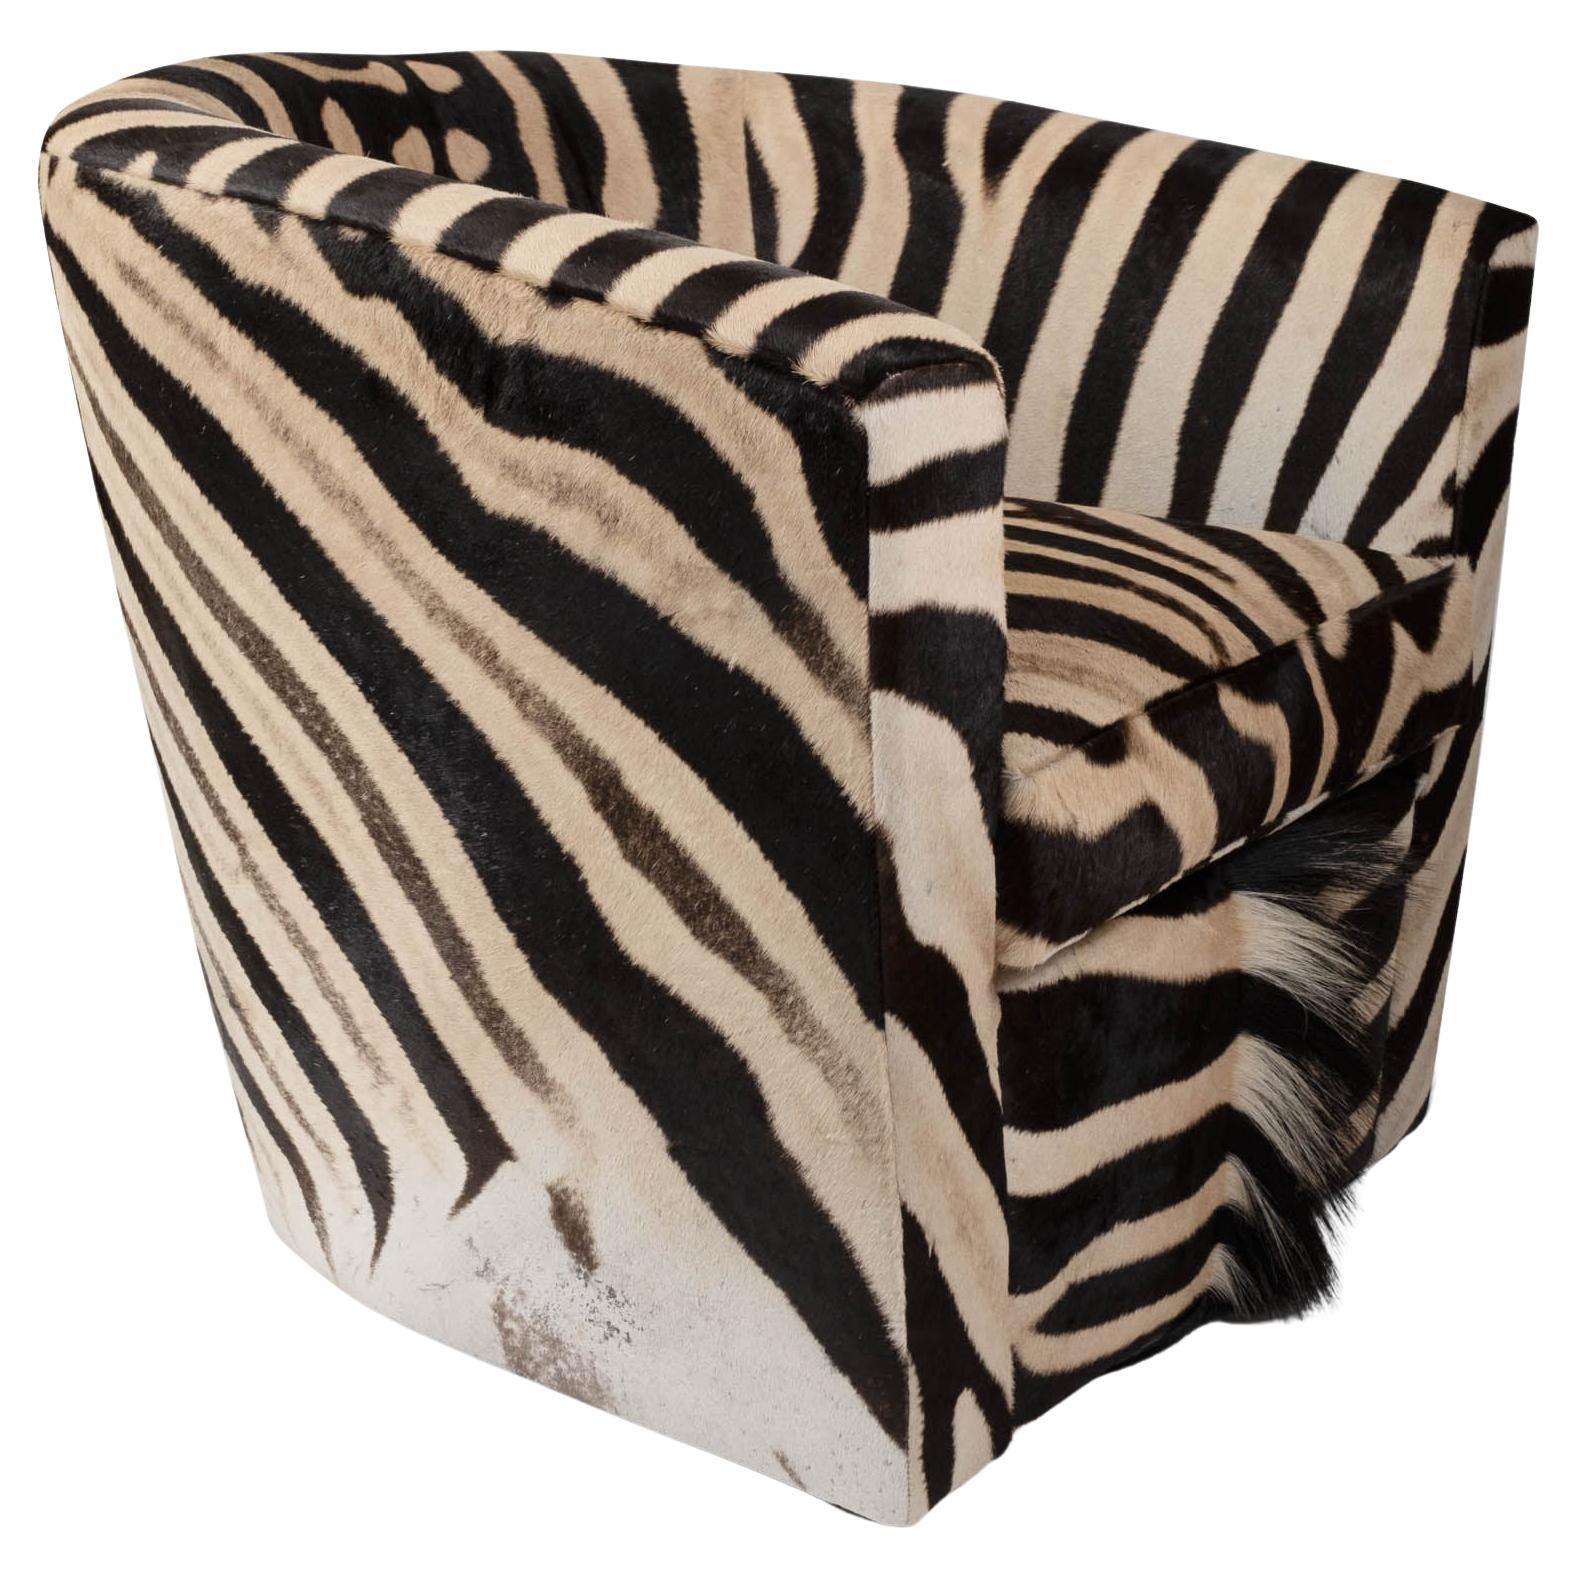 Tub Chair - Zebra Hide